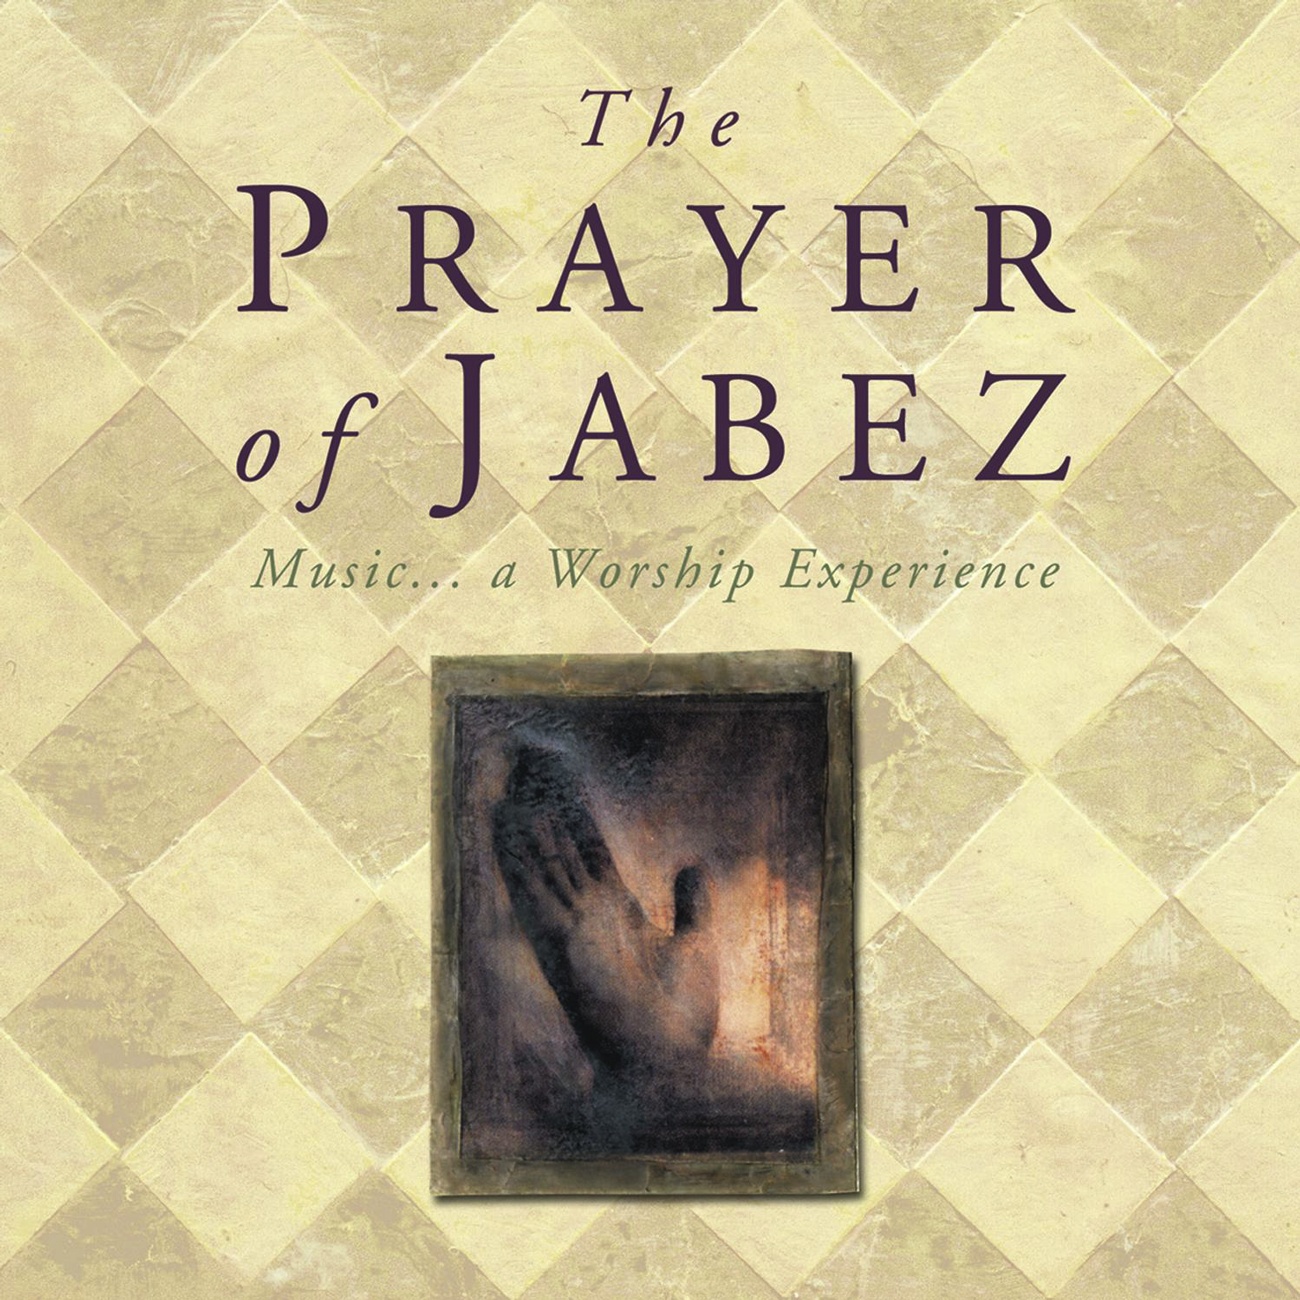 The Prayer Of Jabez (The Prayer Of Jabez Album Version)